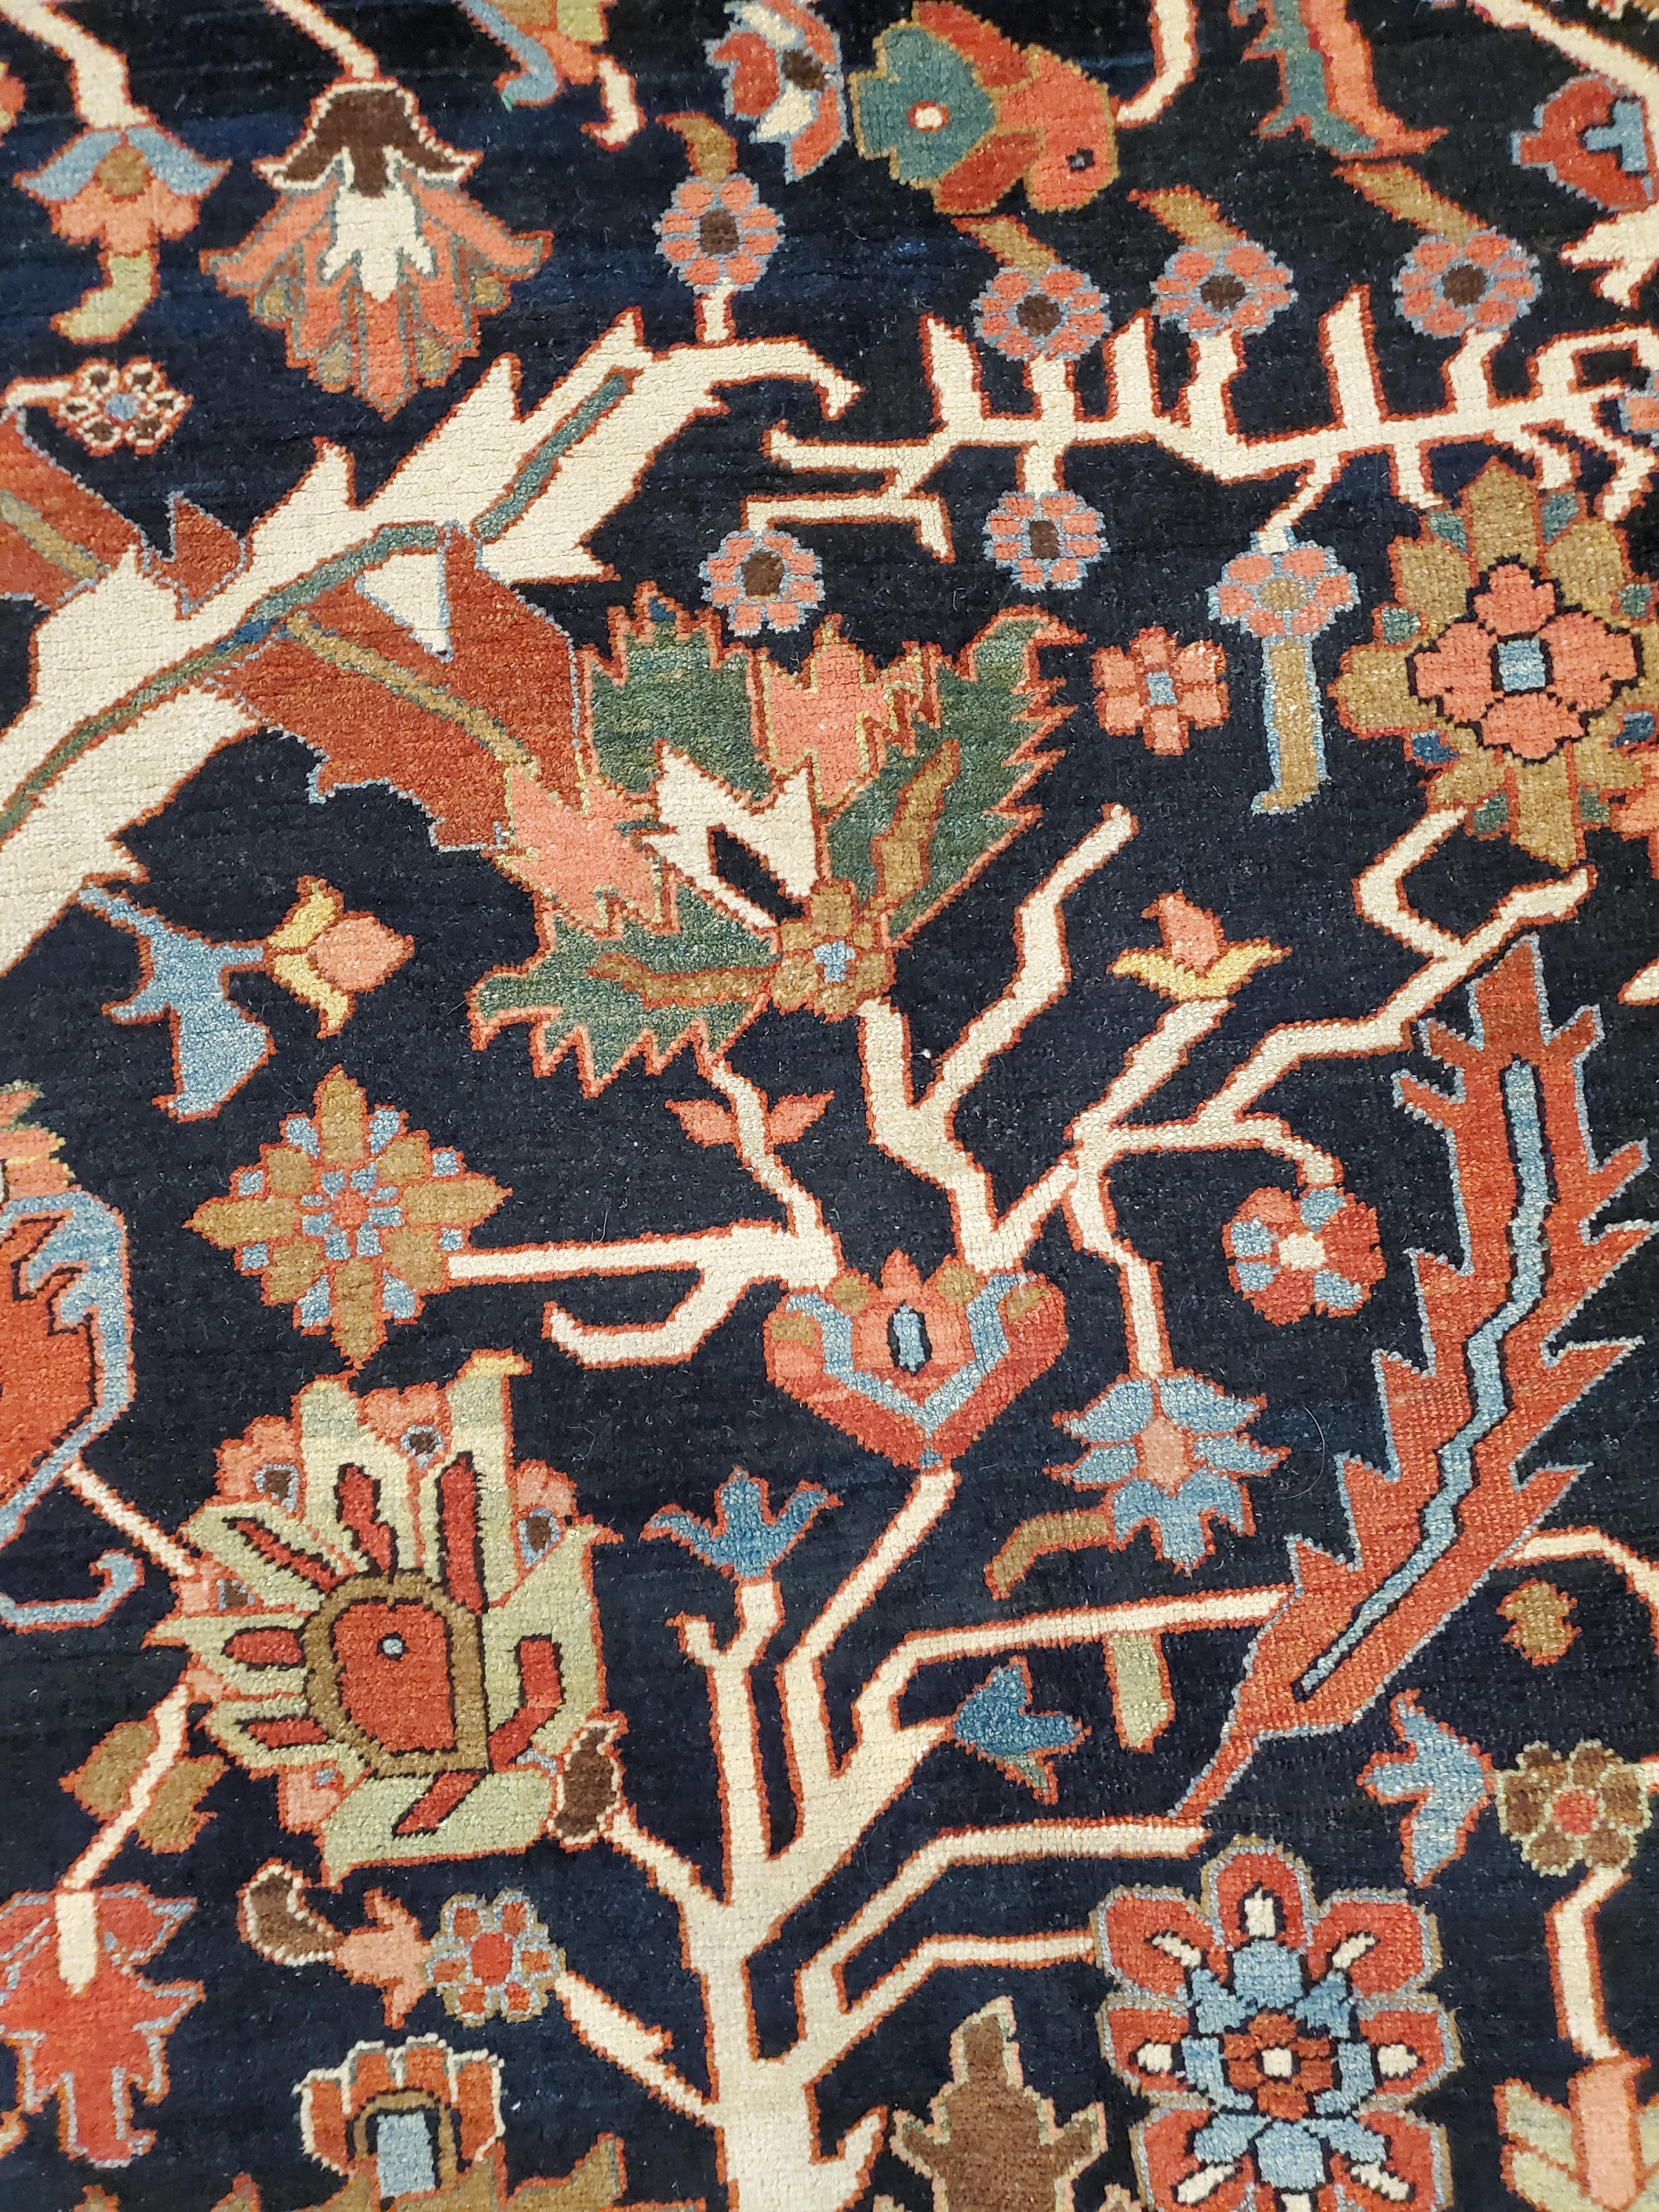 19th Century Antique Persian Heriz Carpet Handmade Wool Oriental Rug, Rust, Navy For Sale